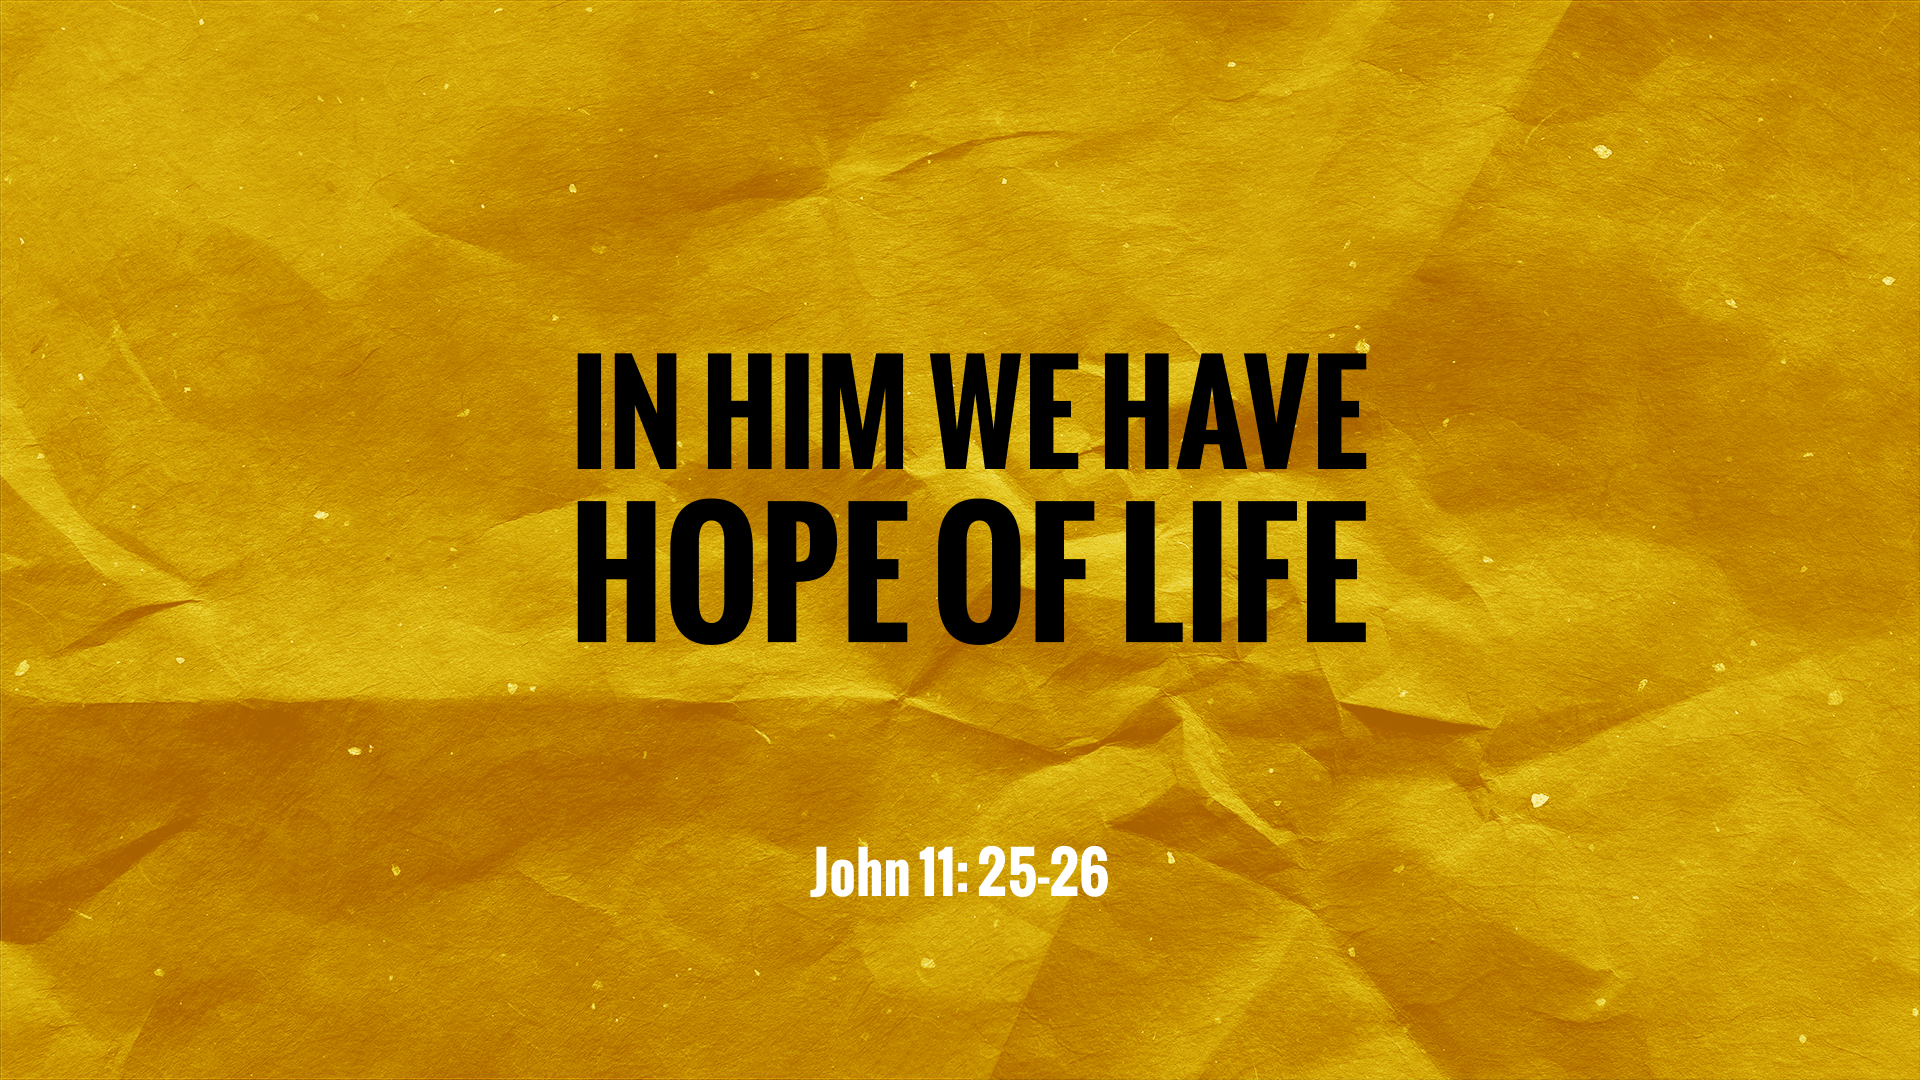 Dec 12, 2021 - In Him We Have Hope of Life  (Video) - John 11: 25-26